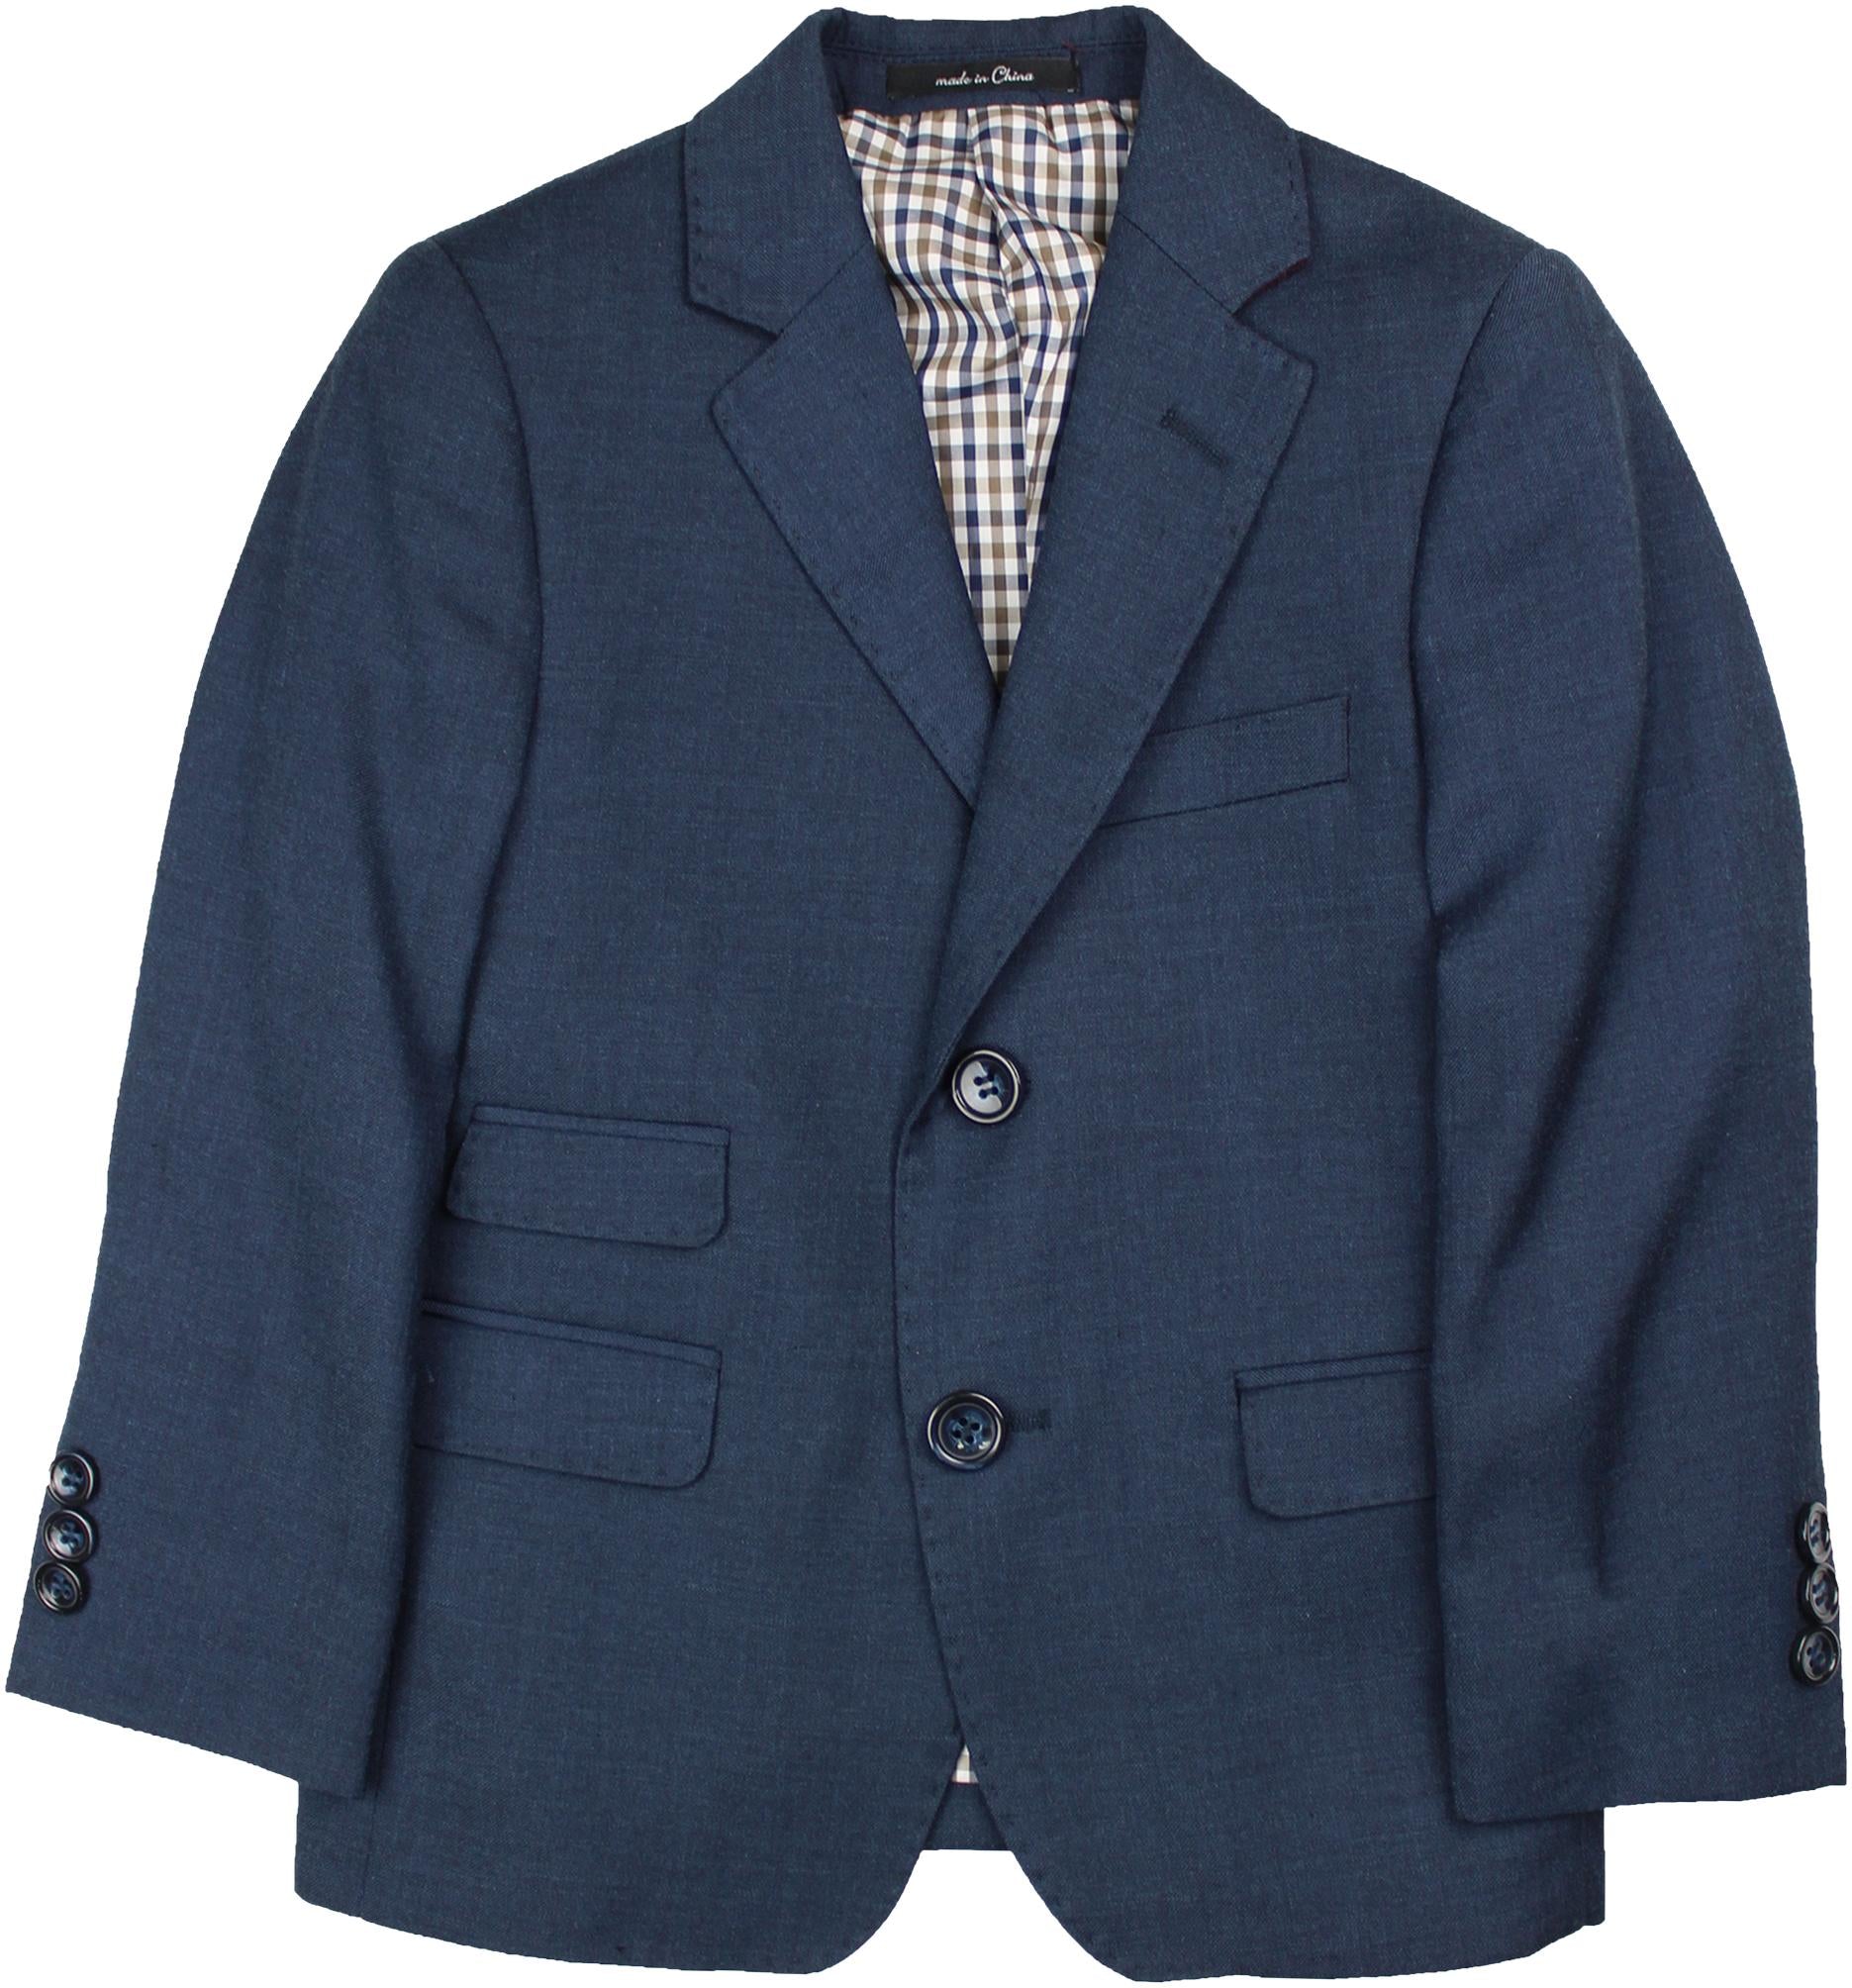 Elie Balleh Checkered Boys Blazers - Sports Coat Jacket